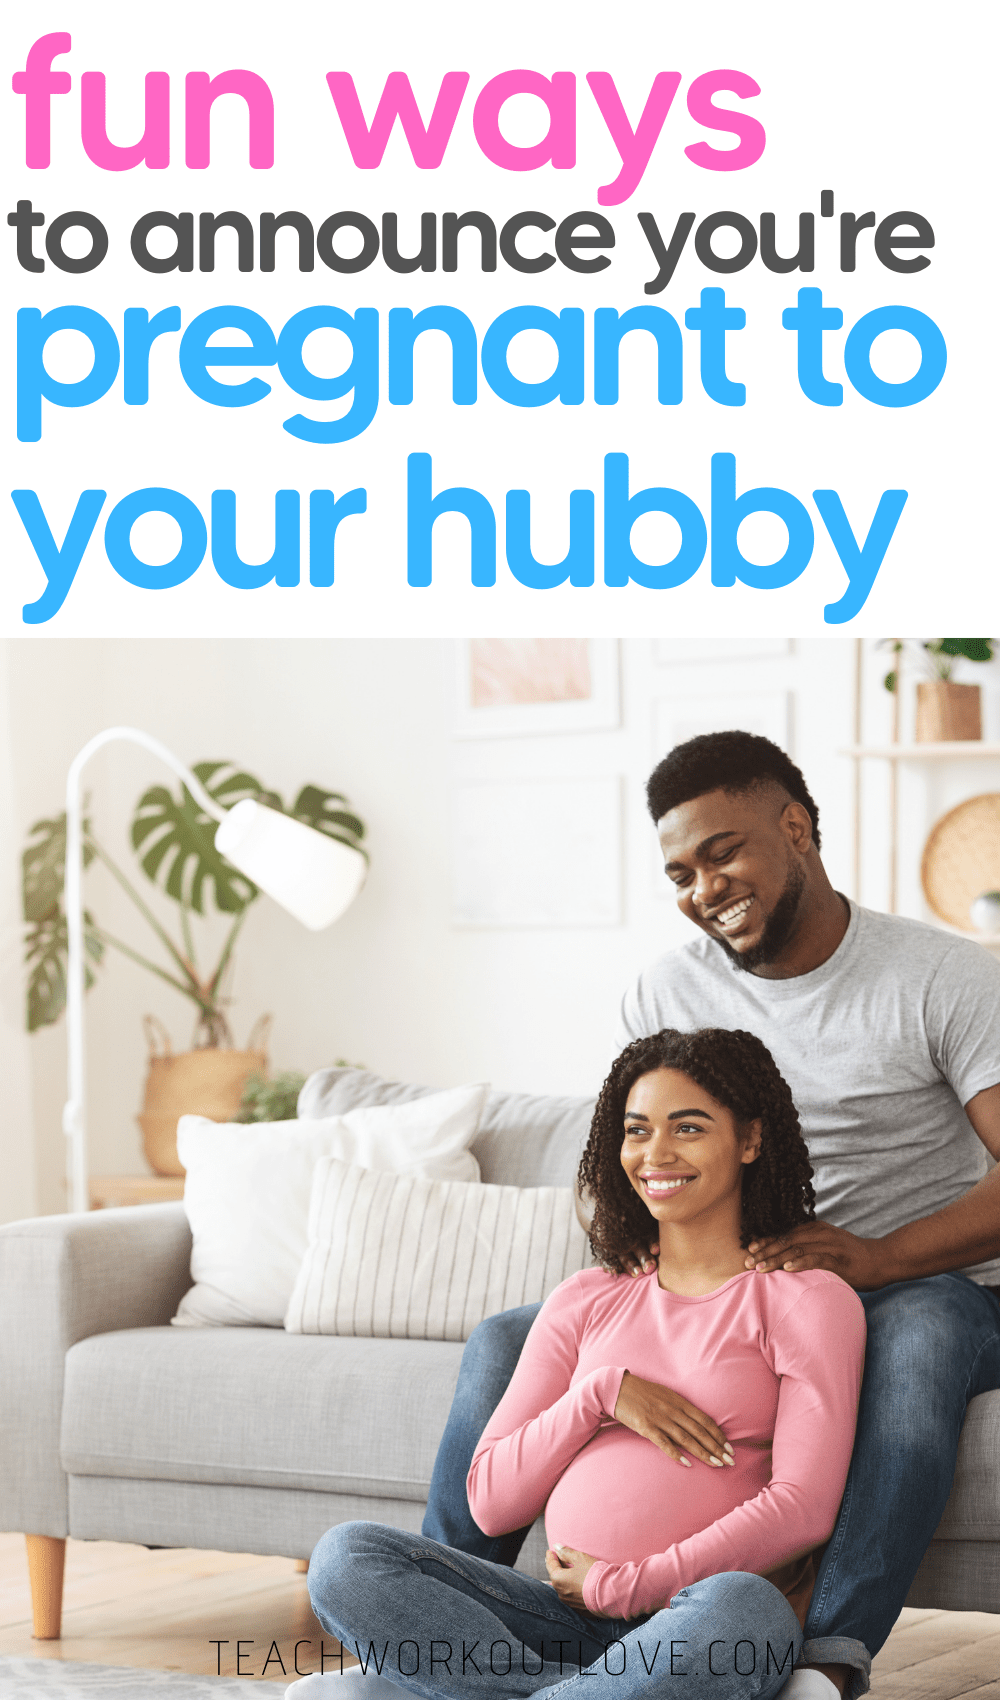 fun ways to announce pregnancy